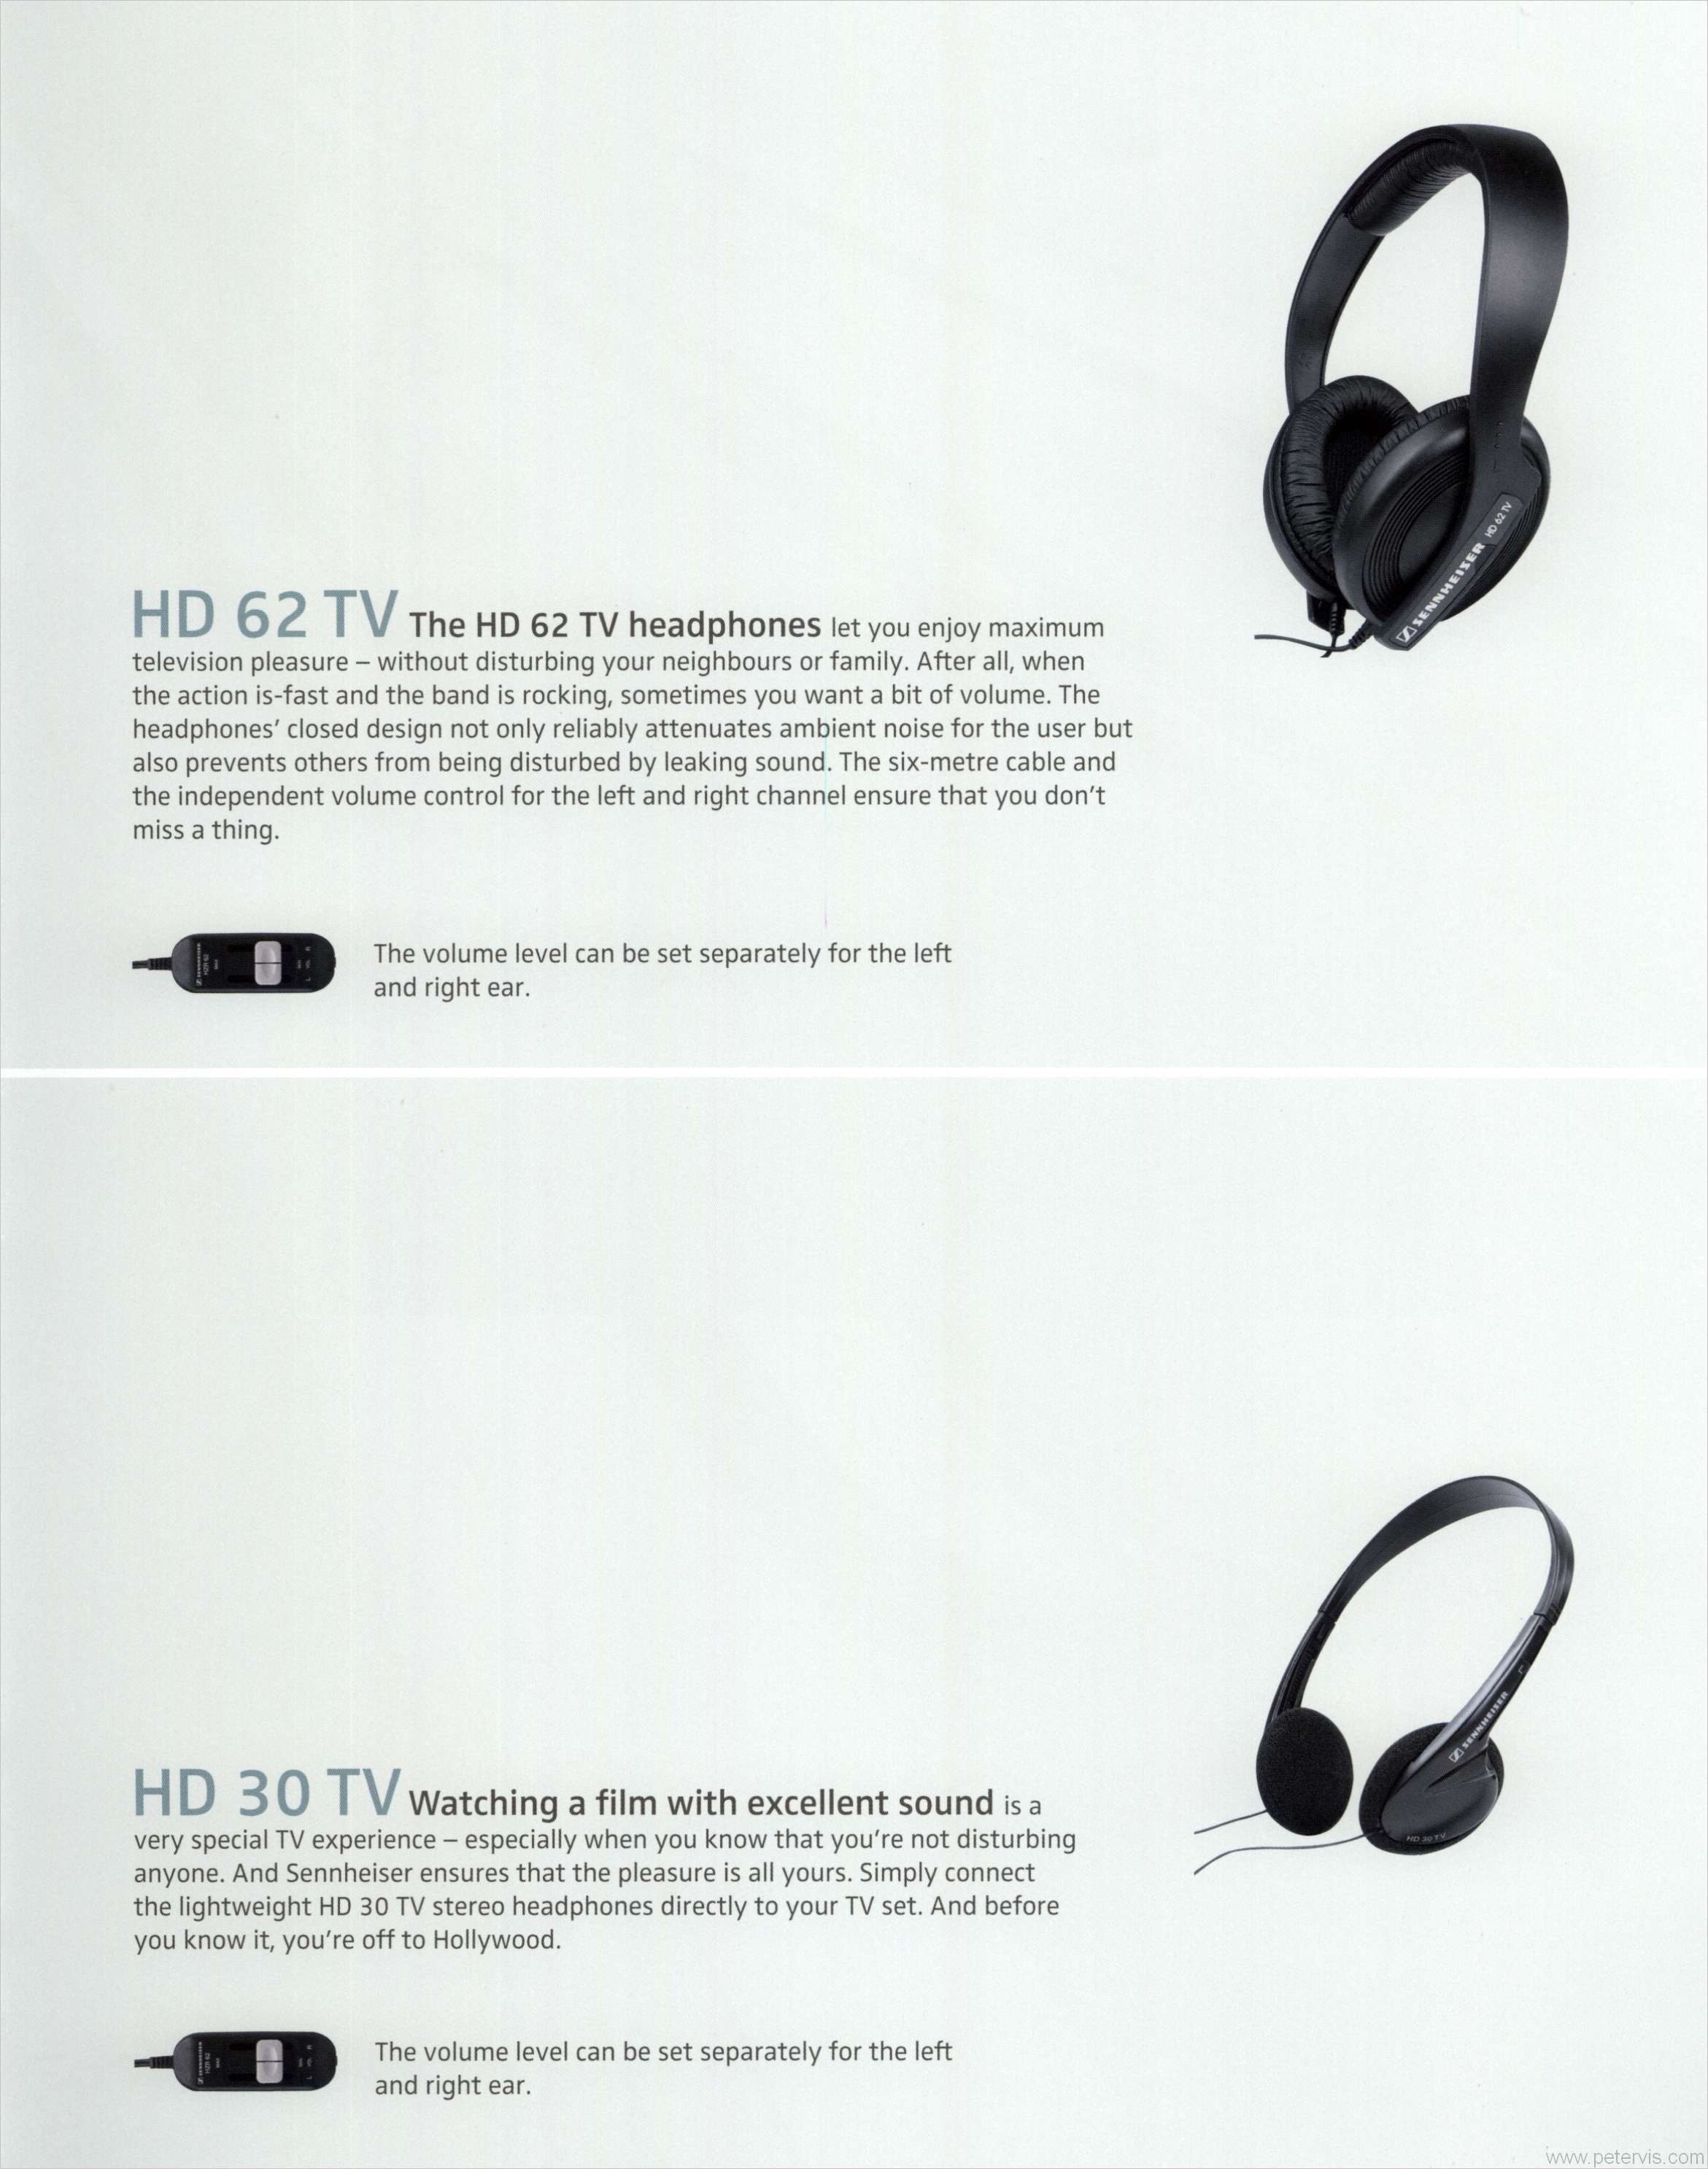 HD 62 TV AND HD 30 TV